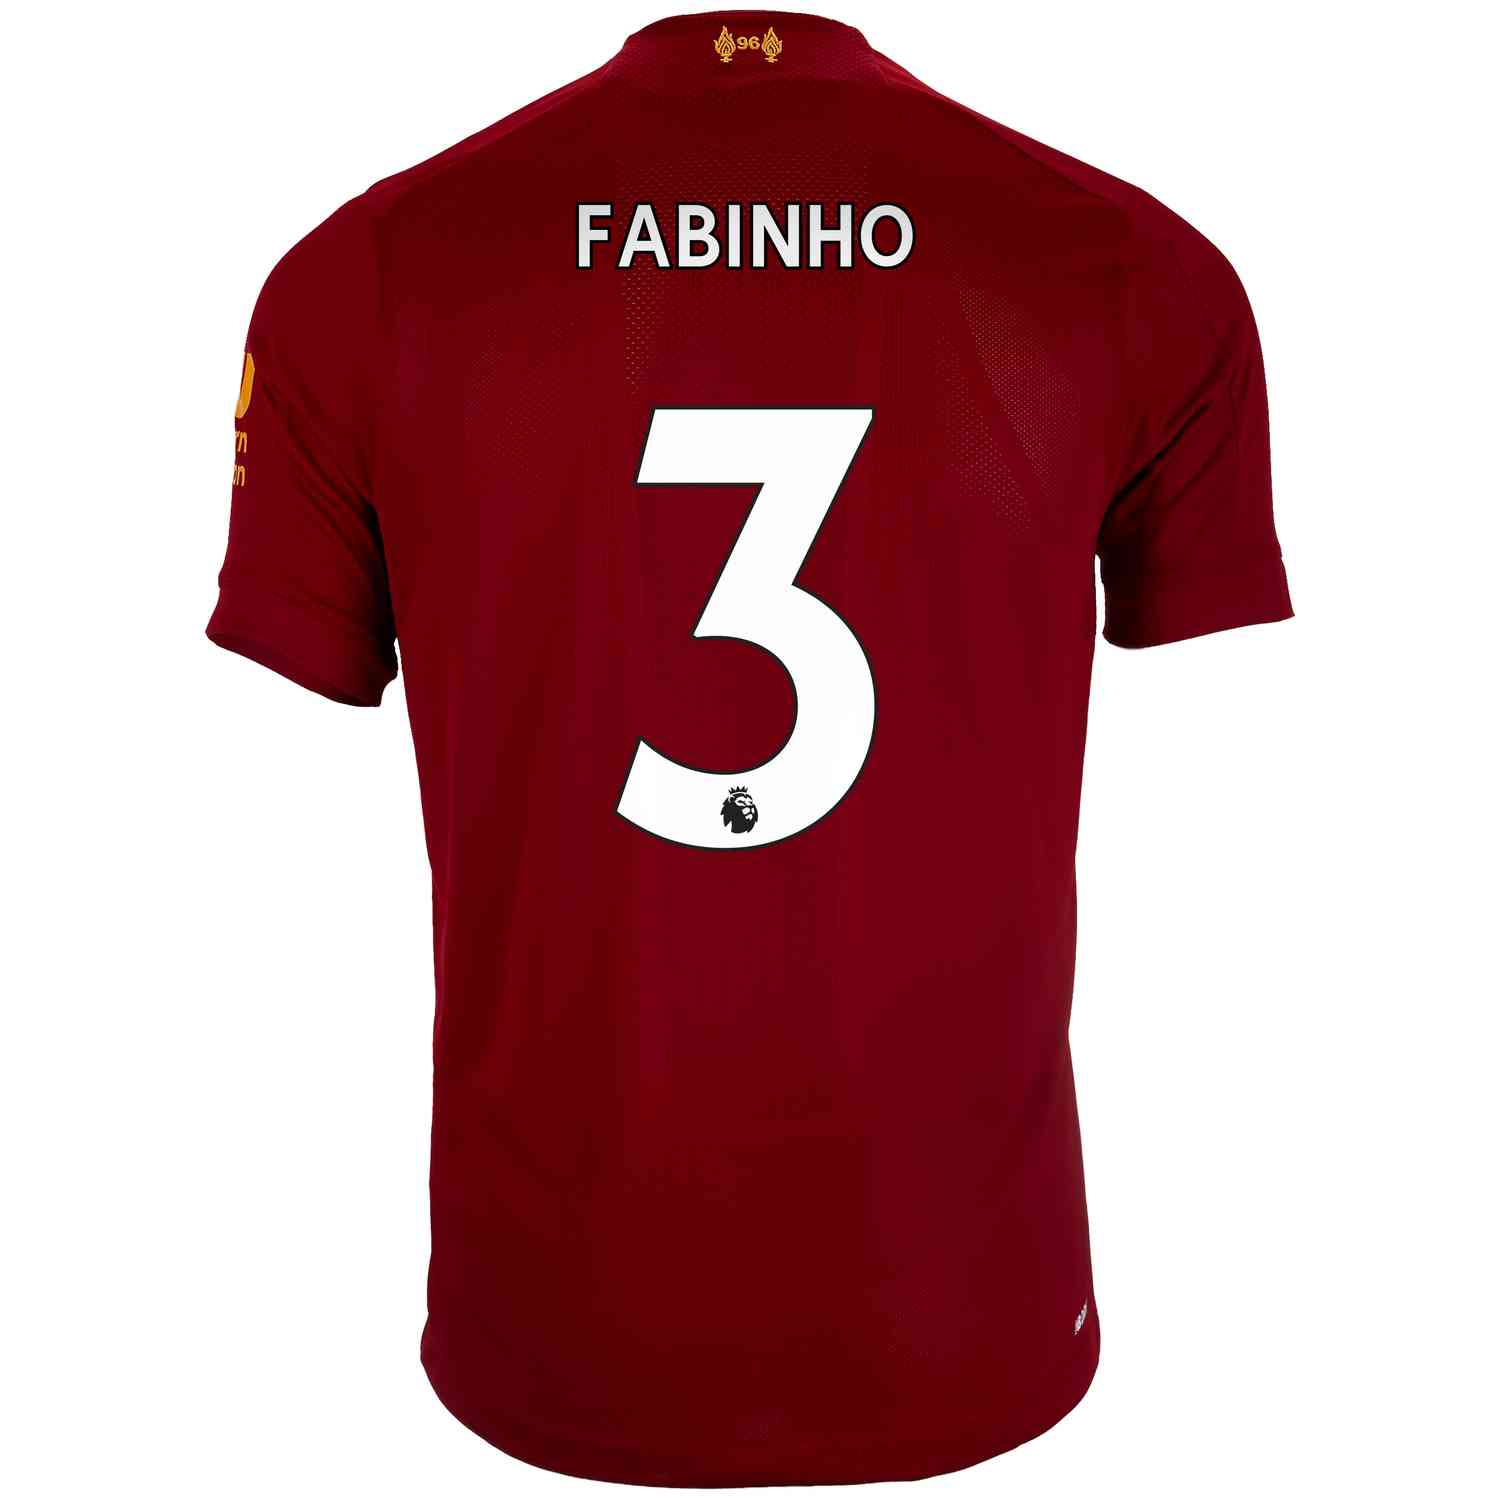 2019/20 New Balance Fabinho Liverpool 